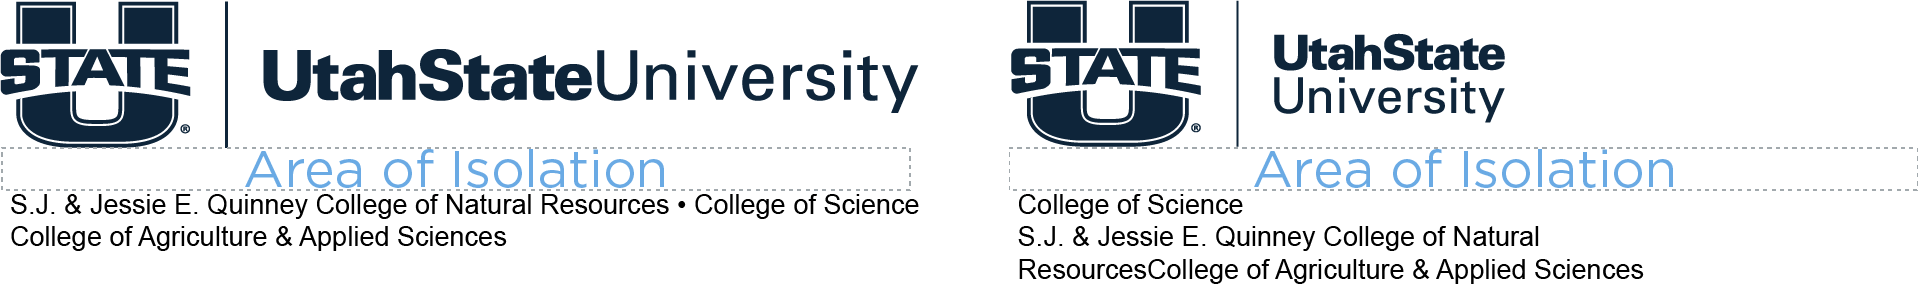 Utah State consolidated logo